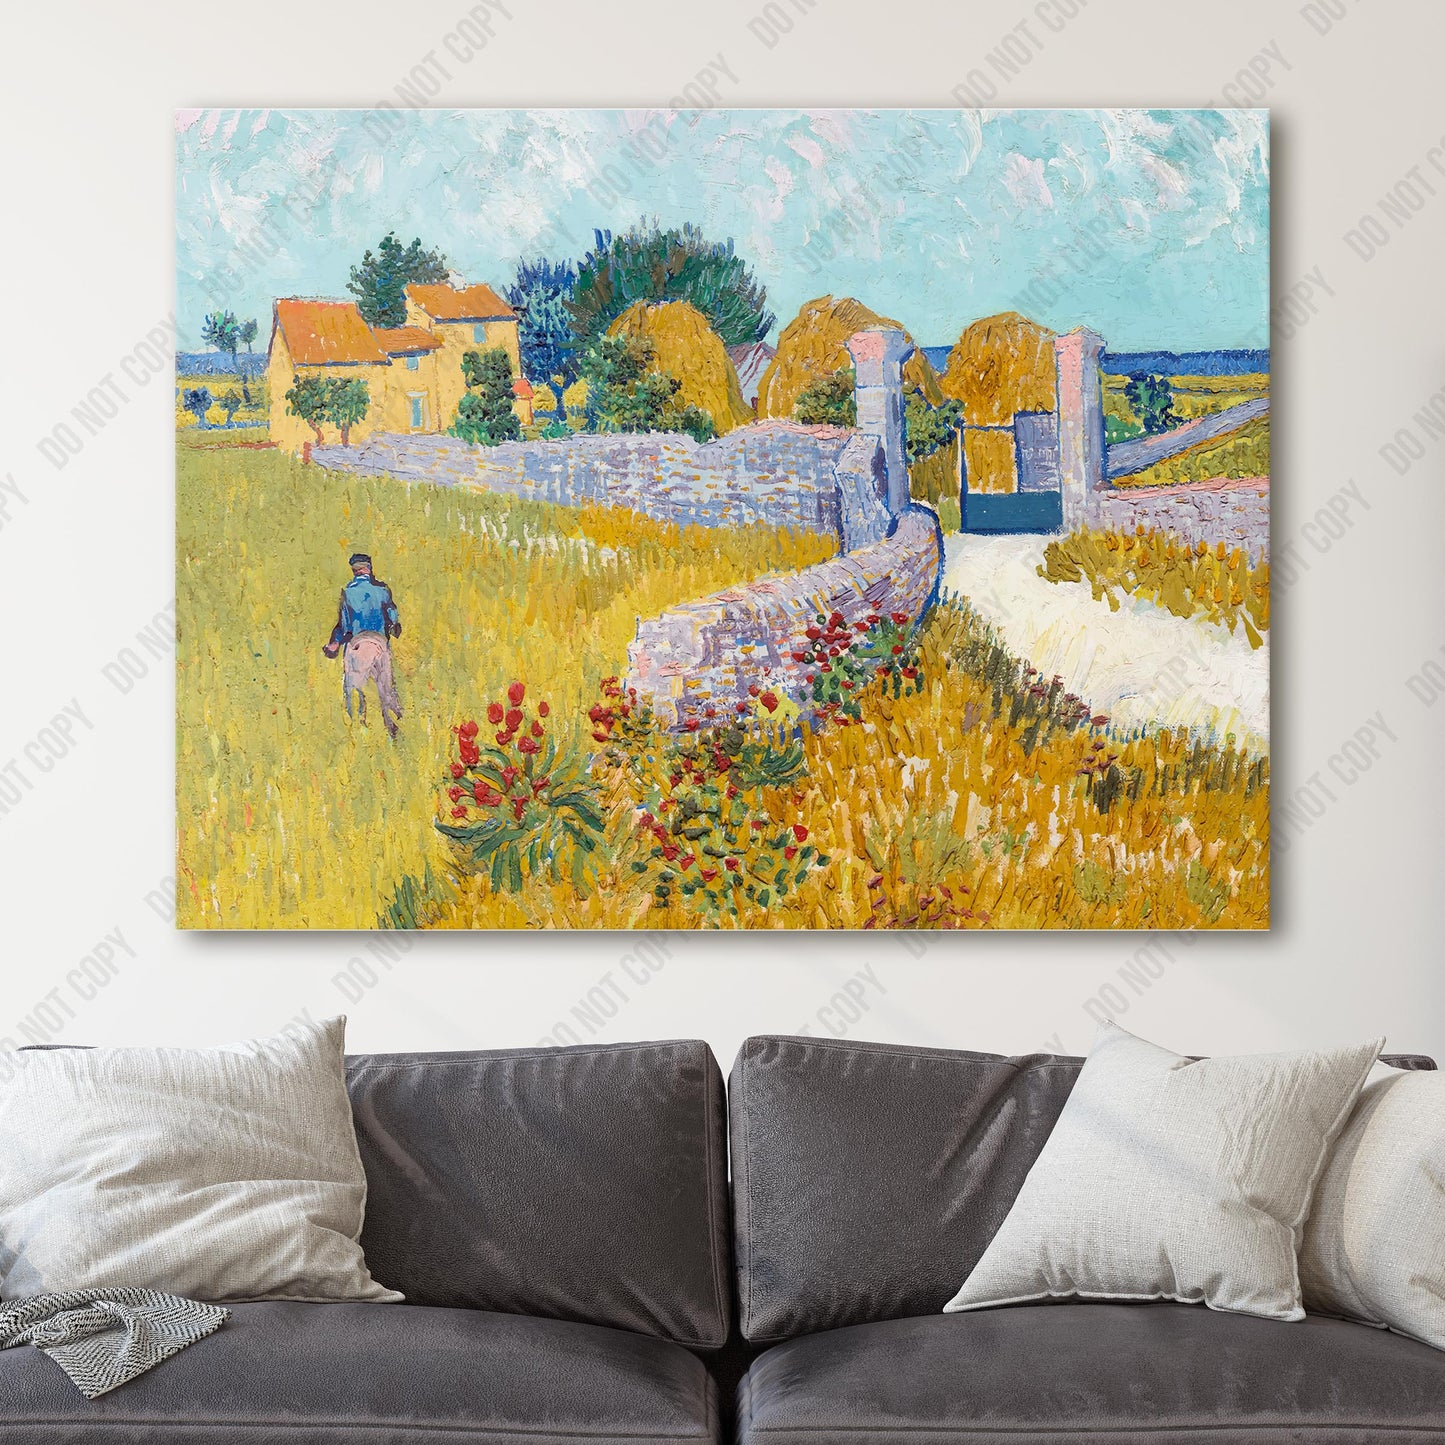 Farmhouse in Provence (1888) by Van Gogh